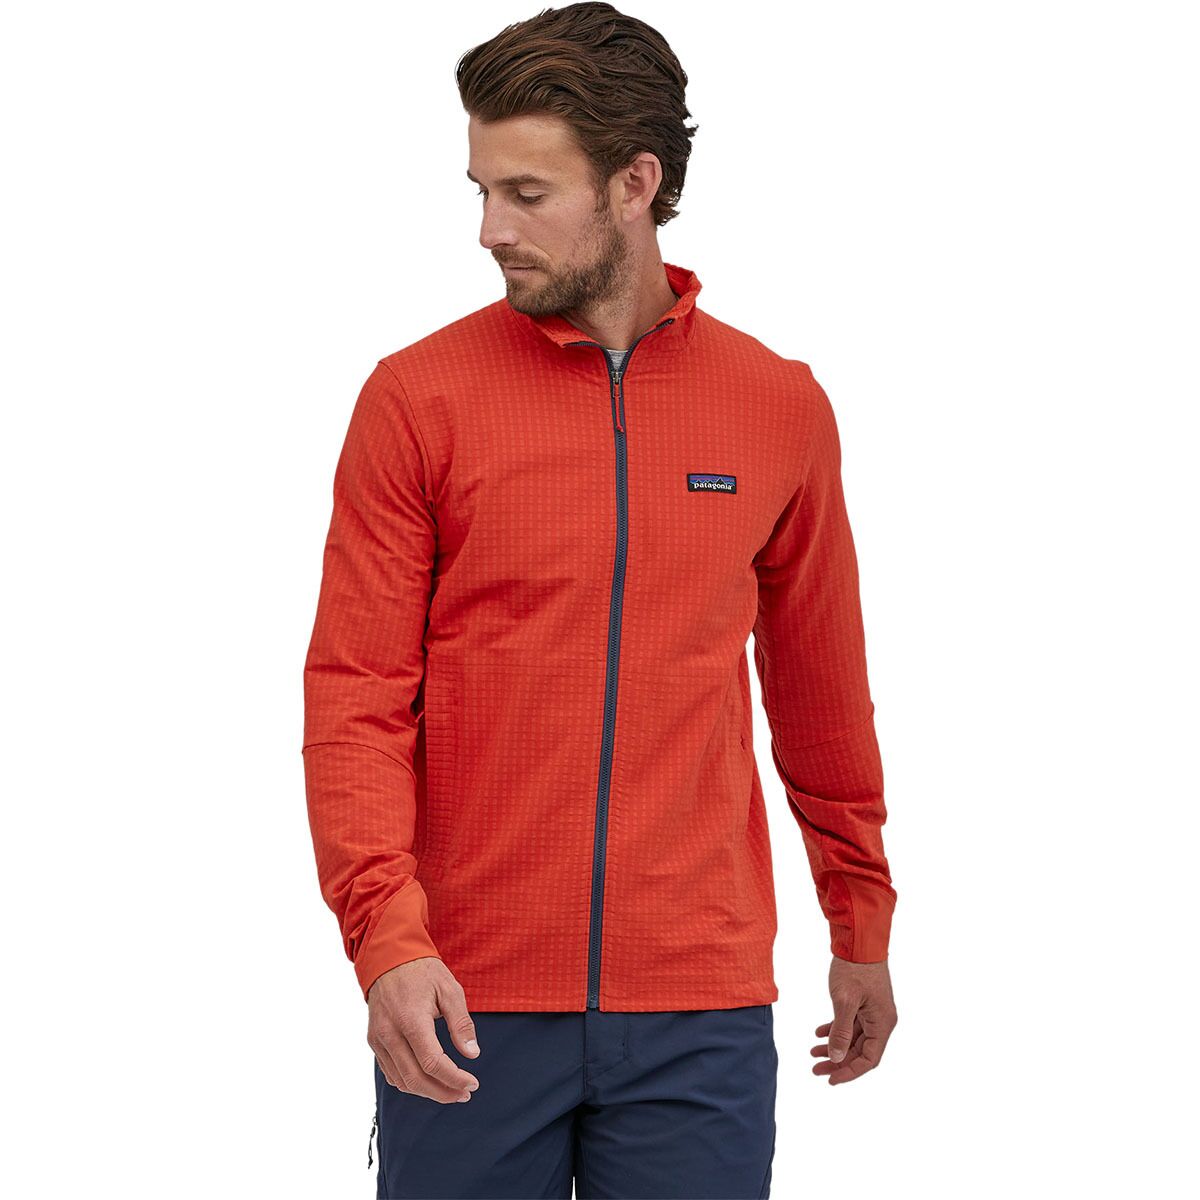 Patagonia R1 TechFace Fleece Jacket - Men's